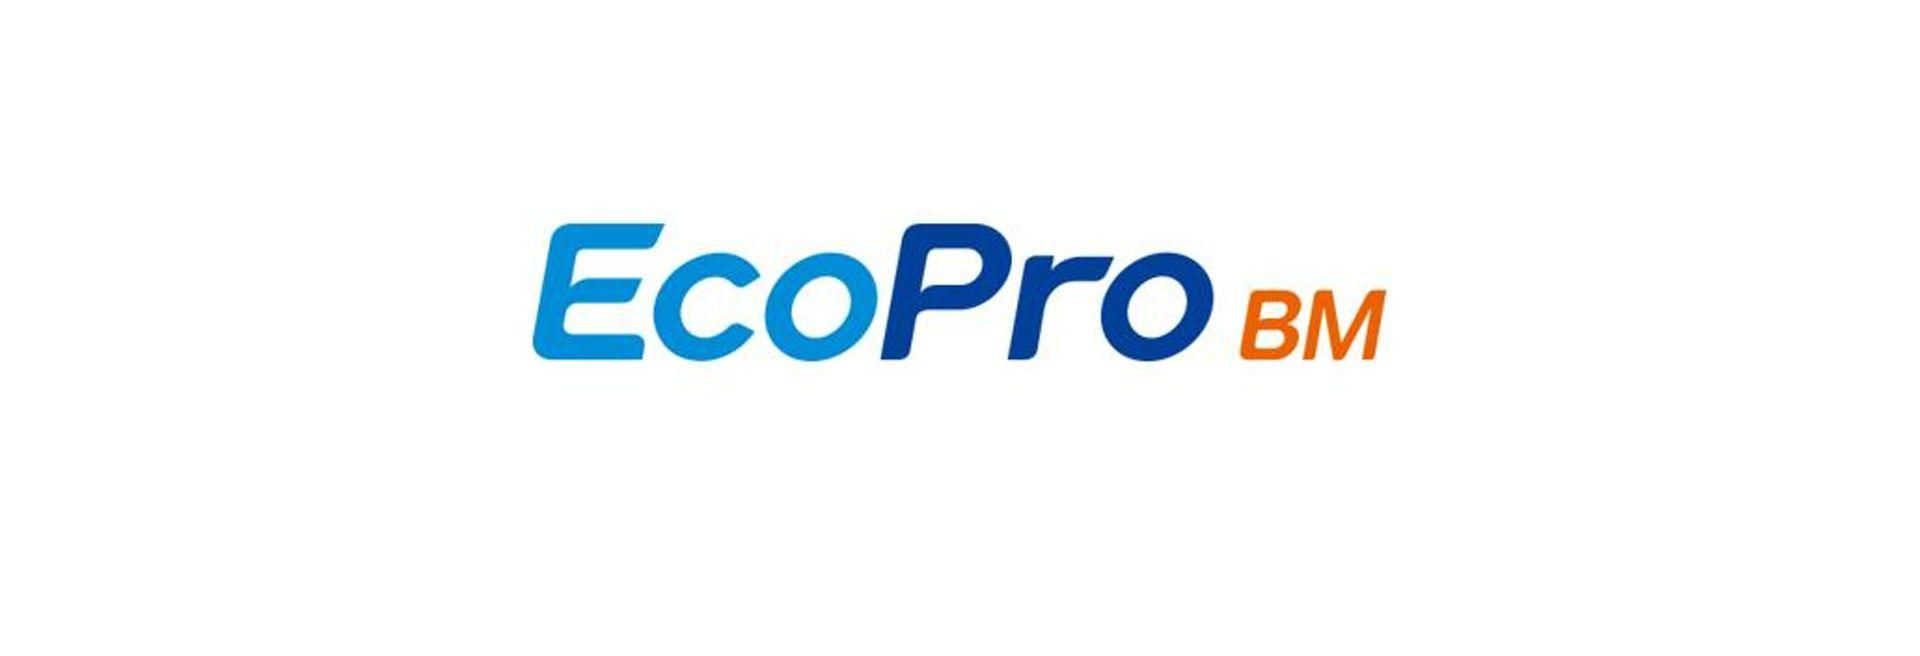 EcoPro BM is to open its first European factory in Debrecen